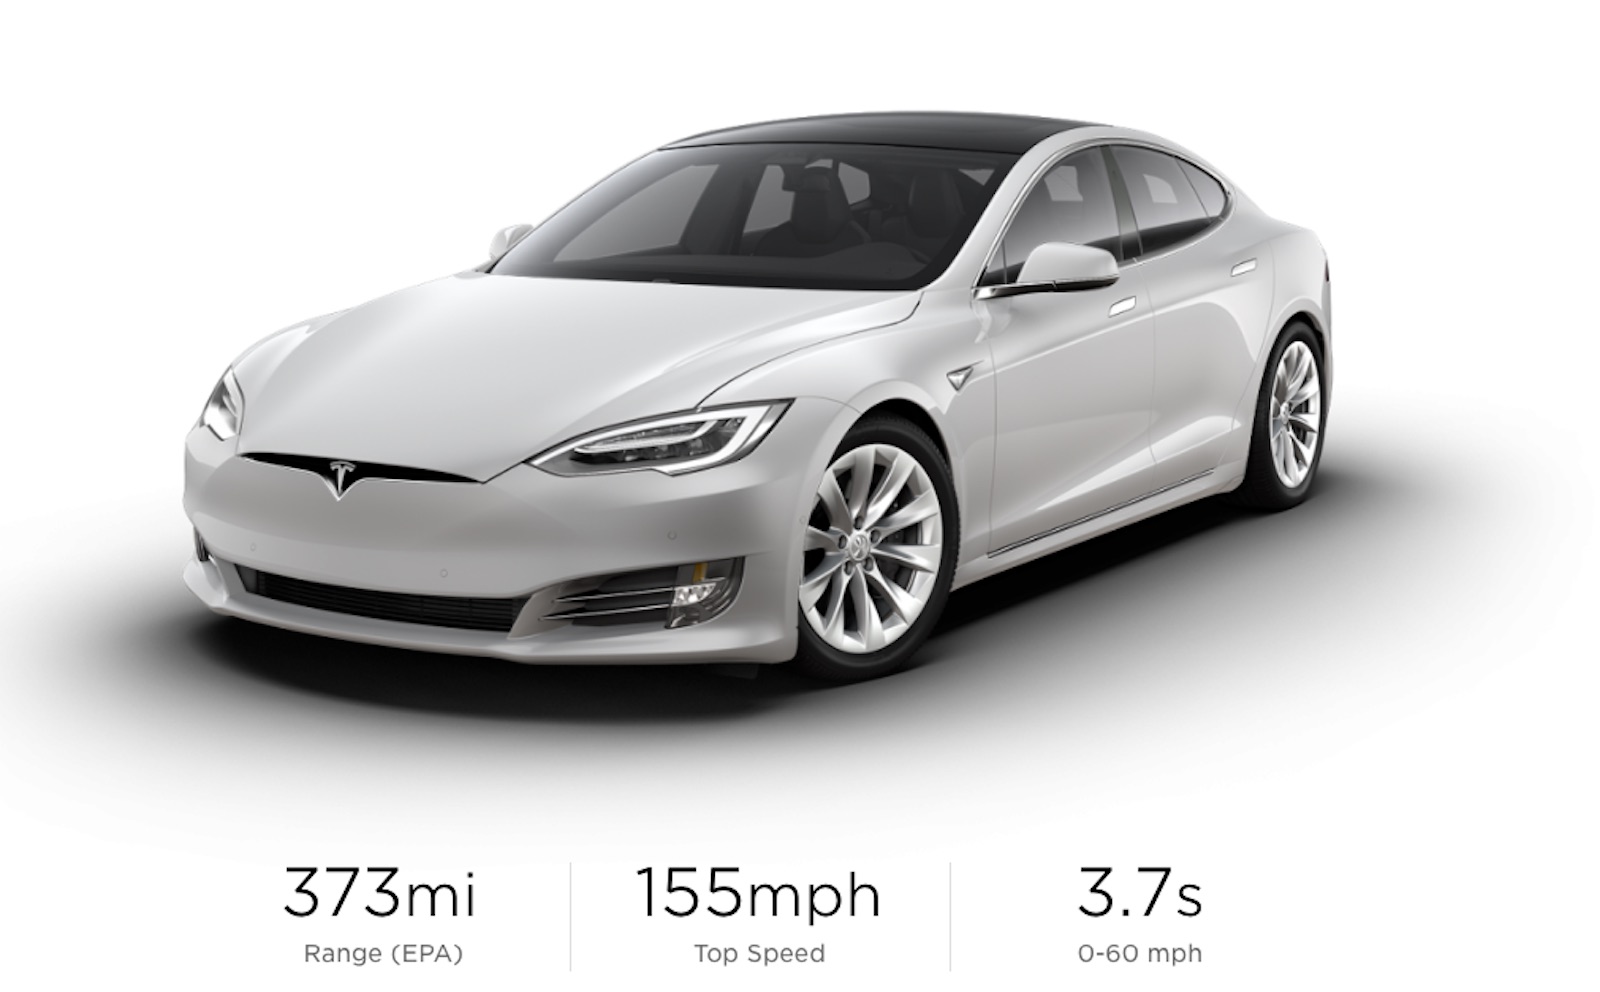 Tesla Model S White